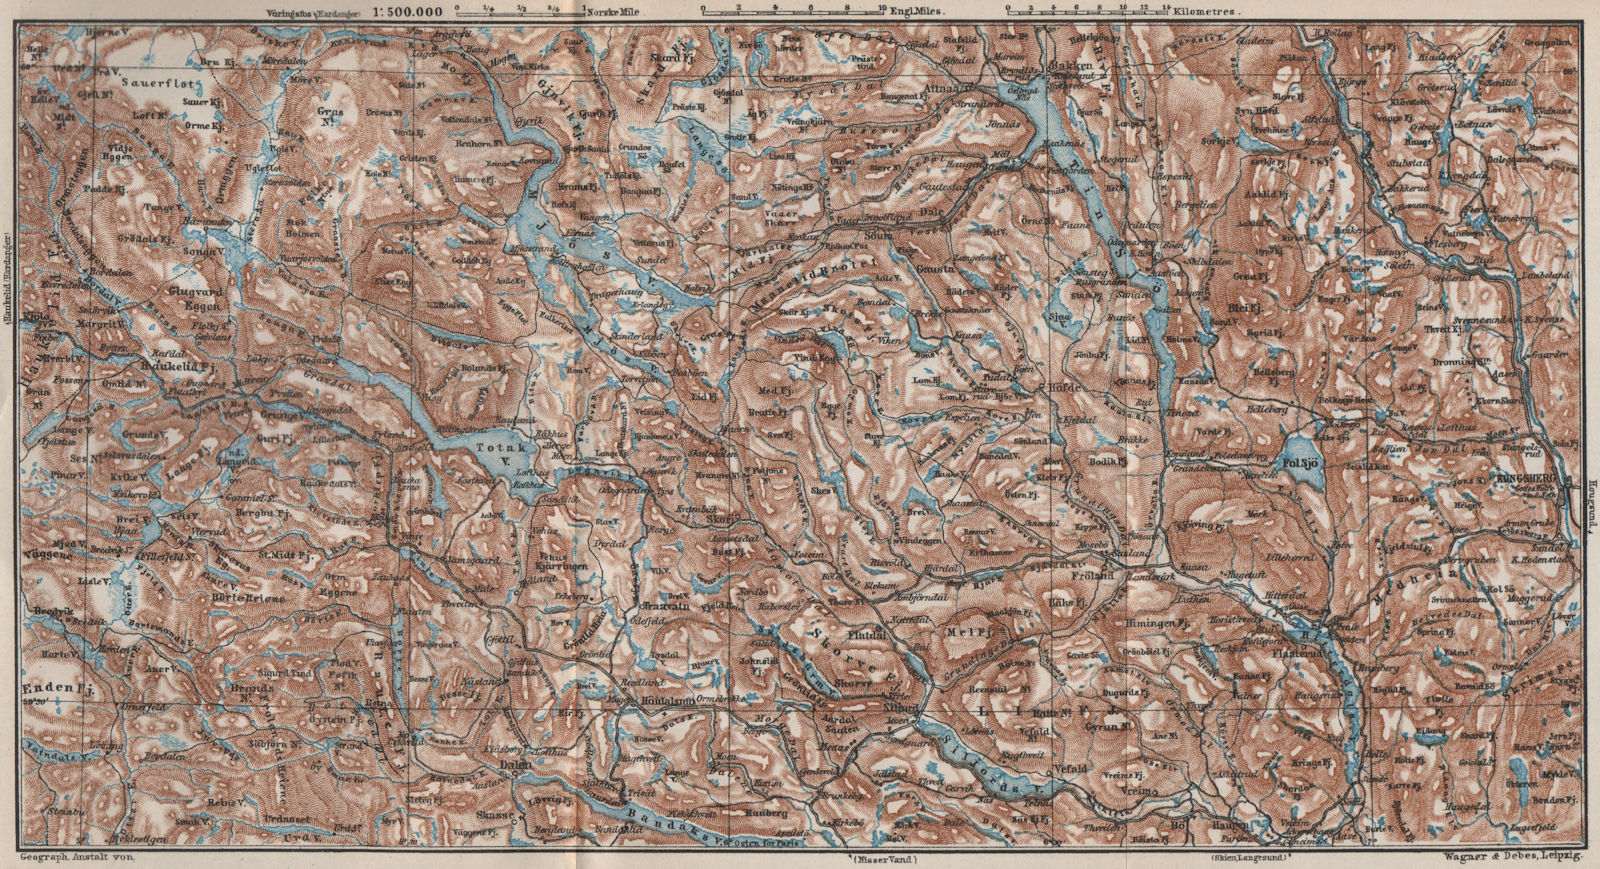 NORTH TELEMARKEN topo-map. Kongsberg Dalen Bakken. Norway kart 1885 old